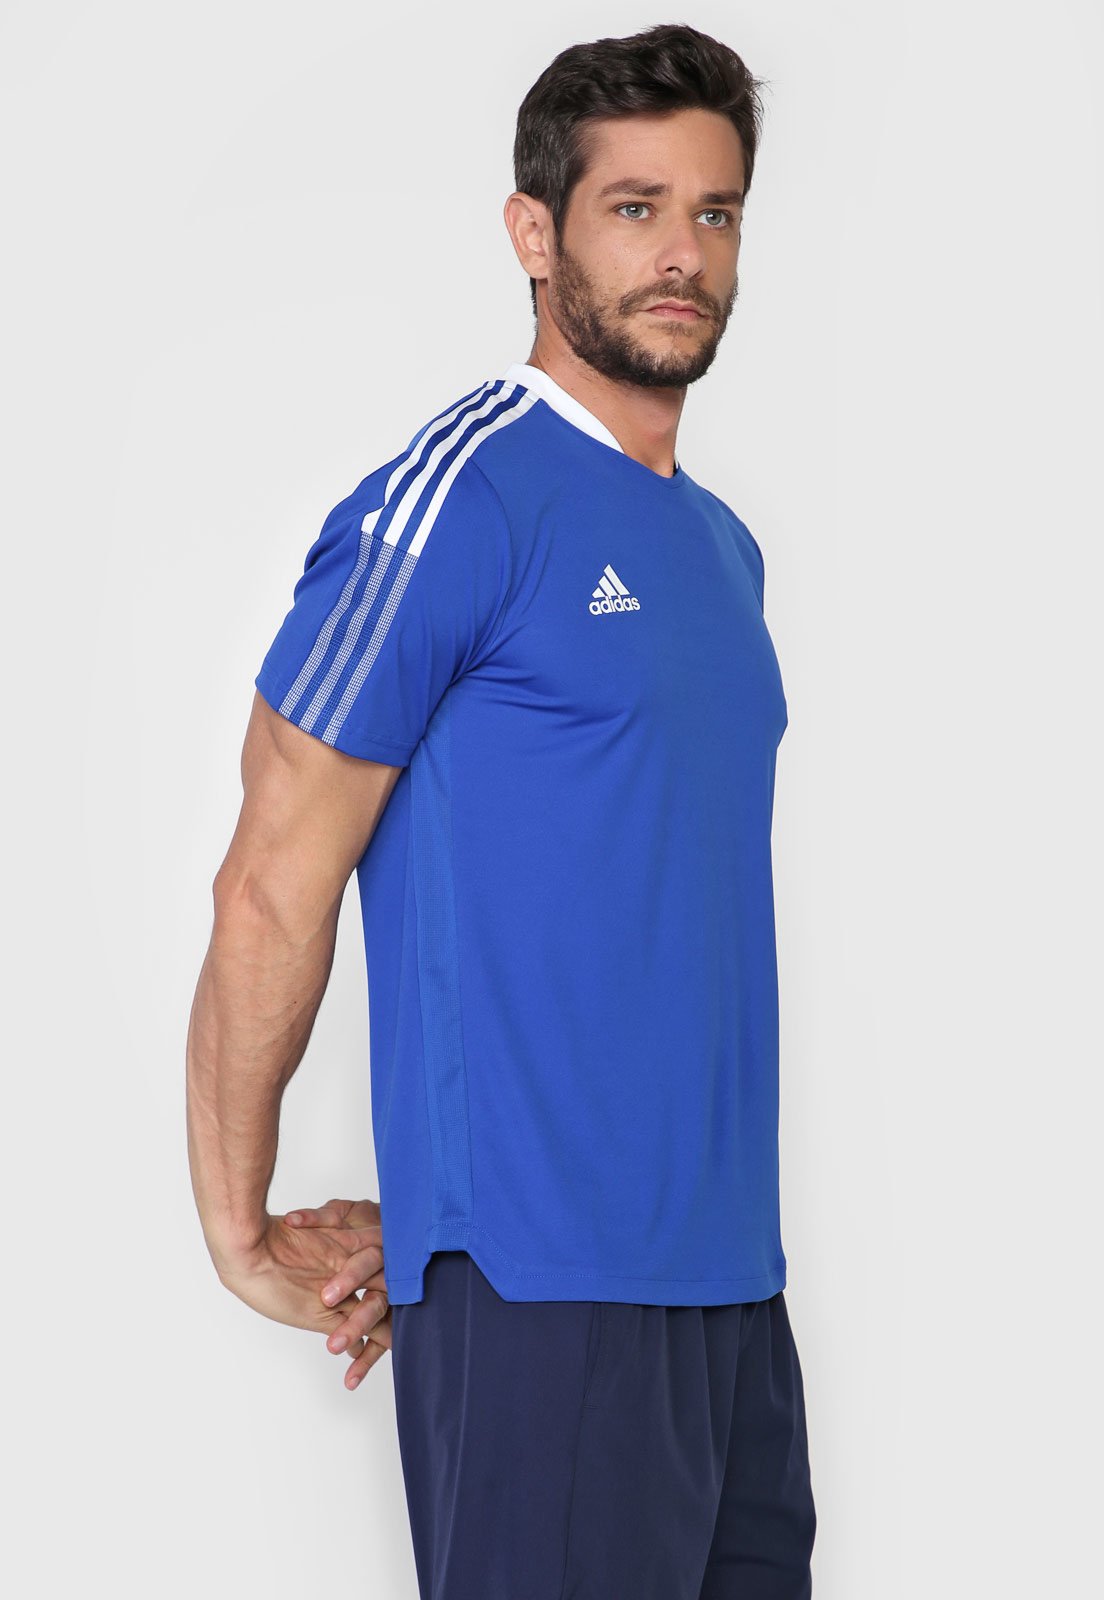 Camisa Brasil treino azul - 021 Sport